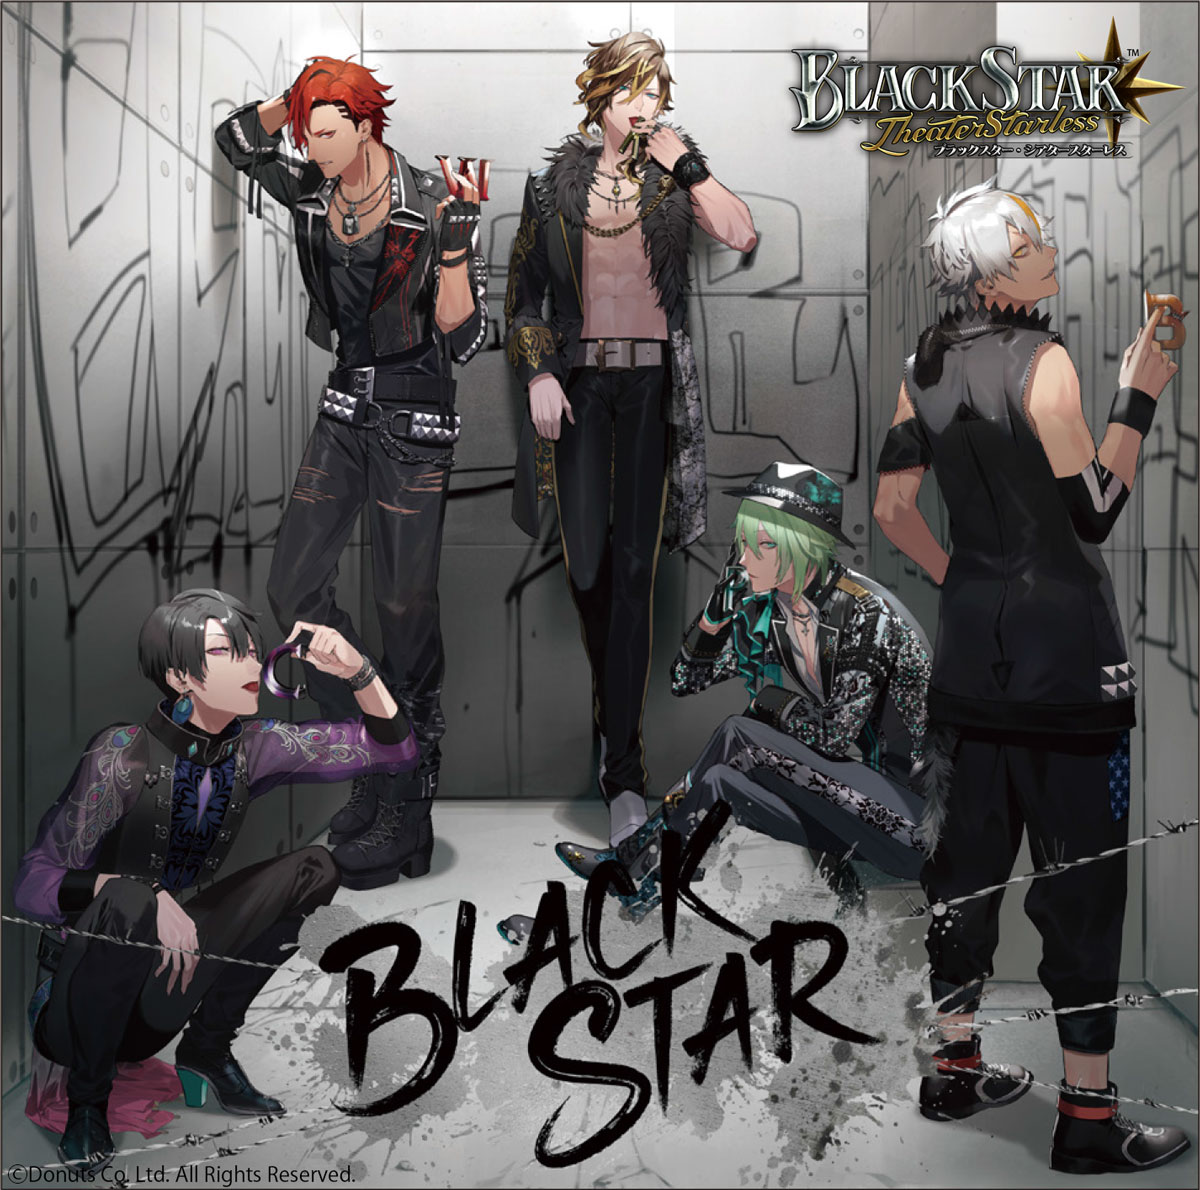 BLACK STAR 1stアルバム 限定盤 全チームセット www.karlapineda.com.sv